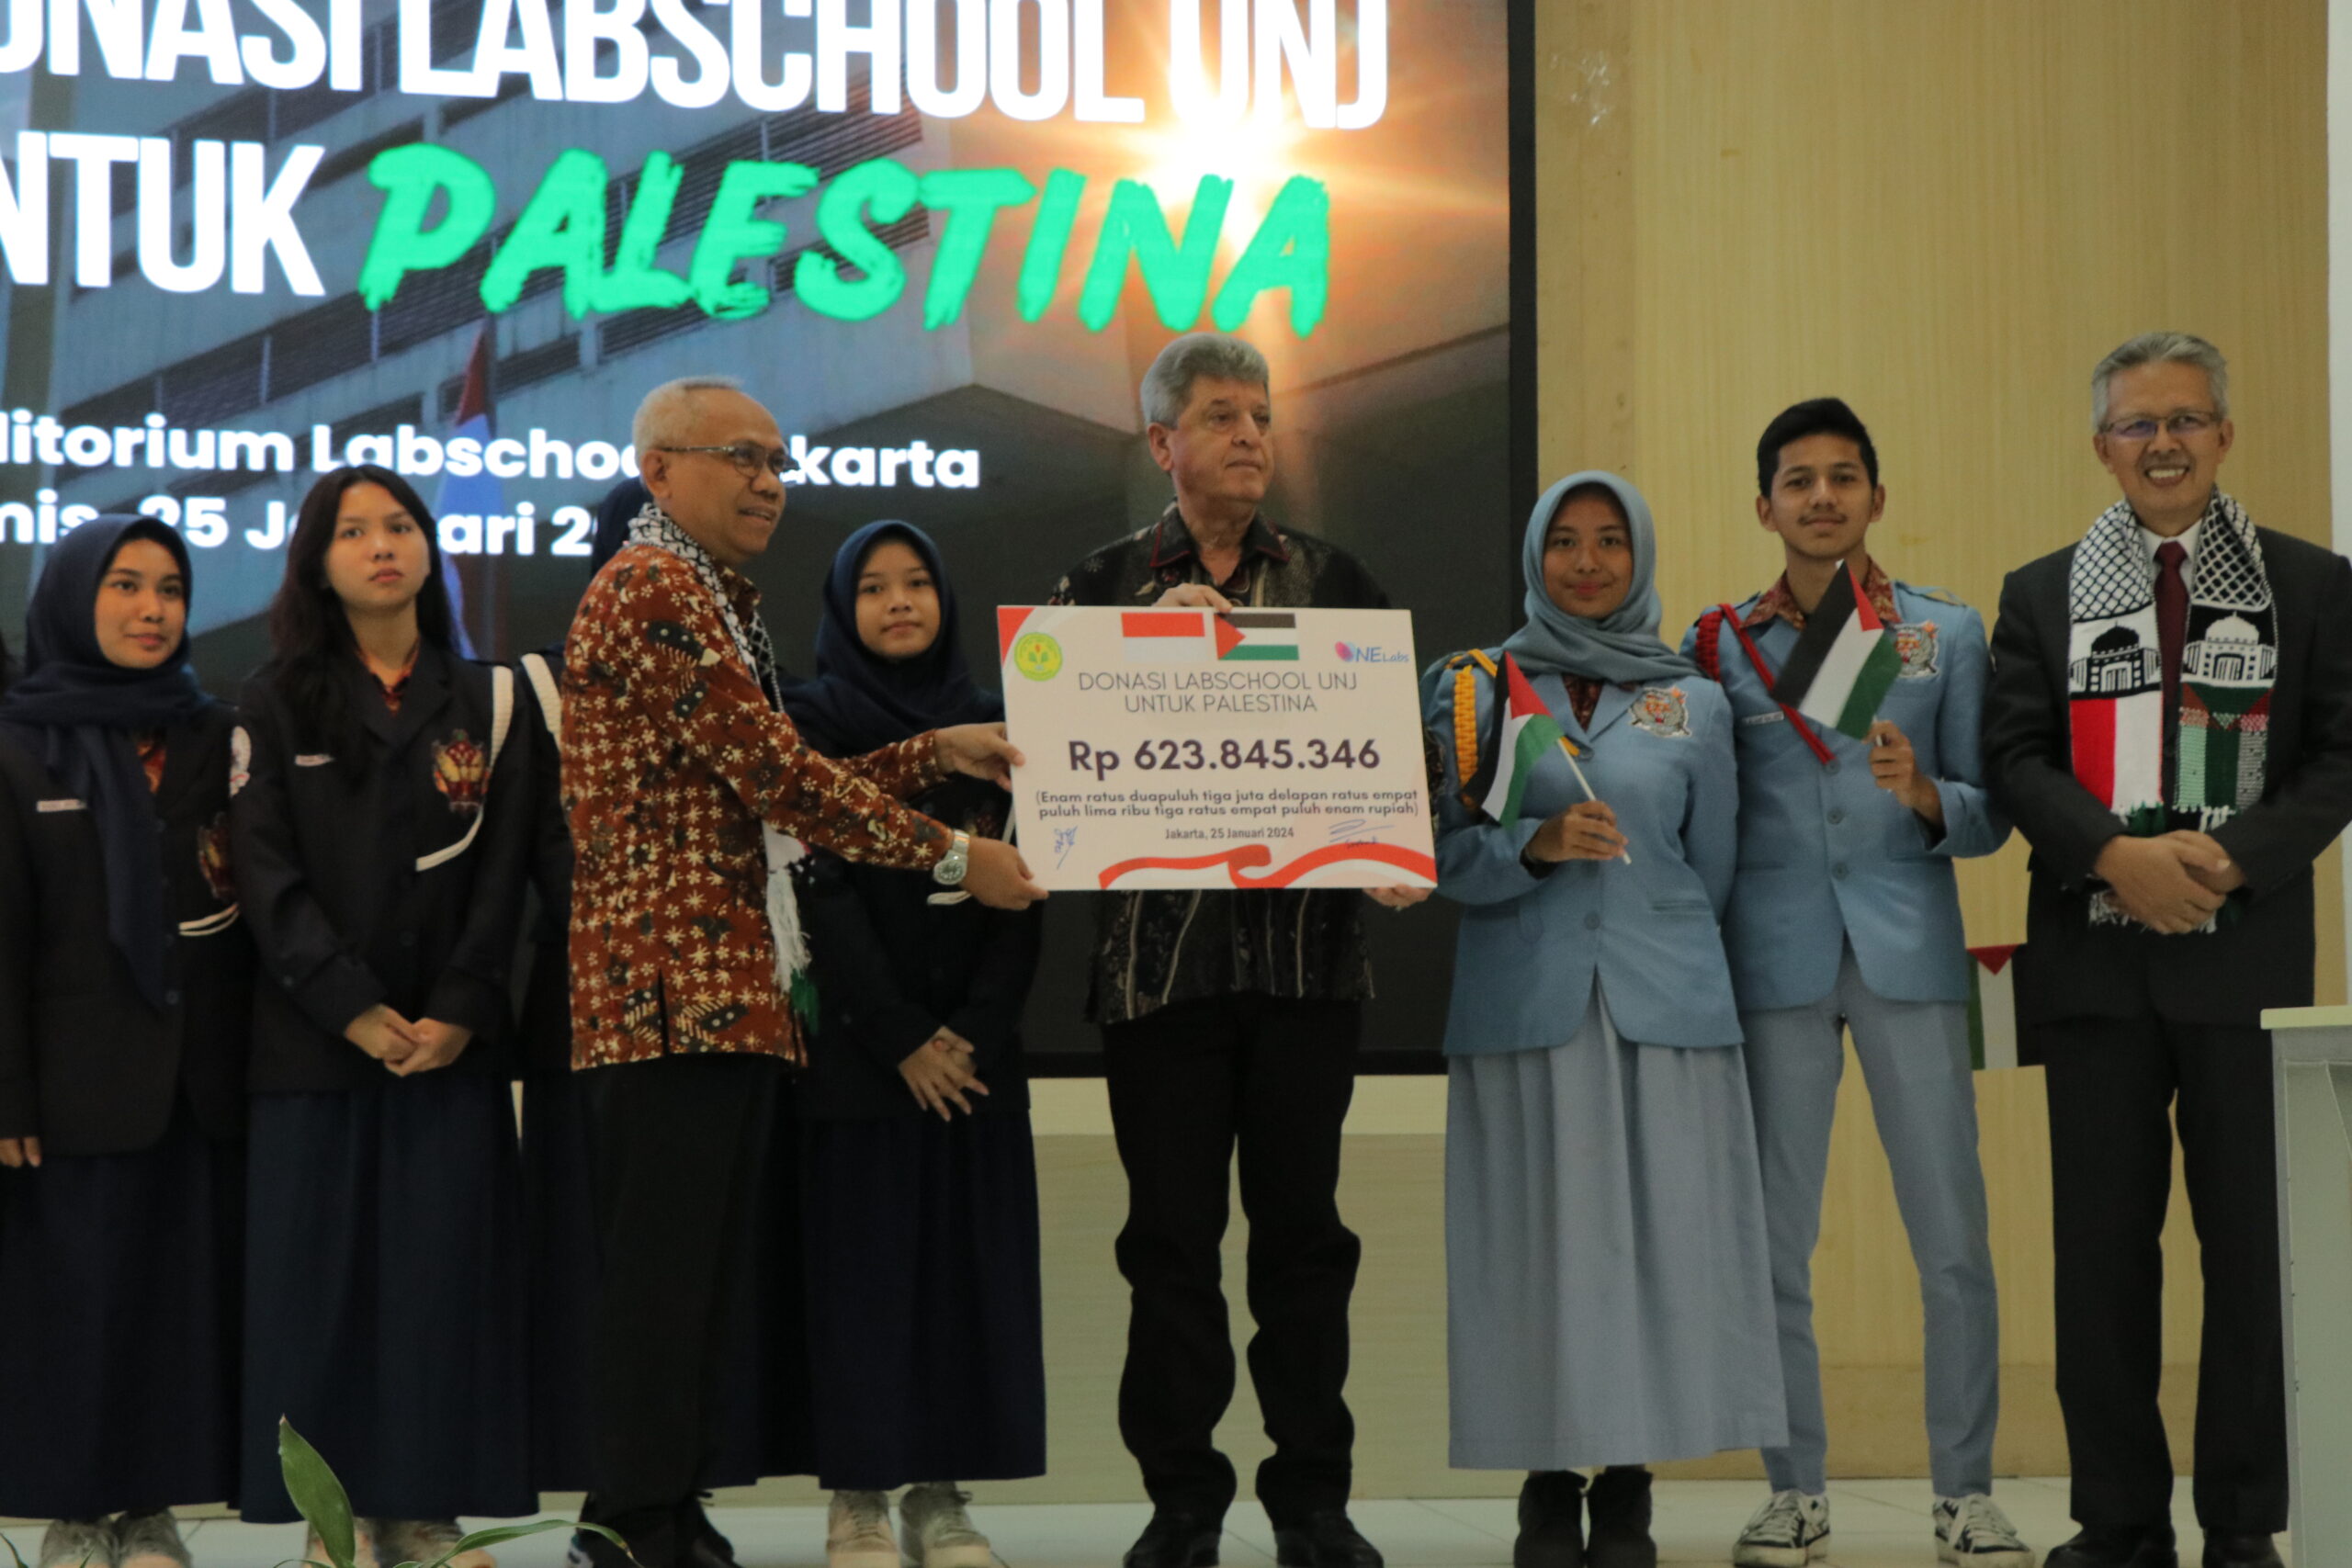 Read more about the article Labschool UNJ Menyalurkan Semangat Kemanusiaan: Sumbangkan Rp. 623.845.346 untuk Palestina melalui Inisiatif Labschool Peduli